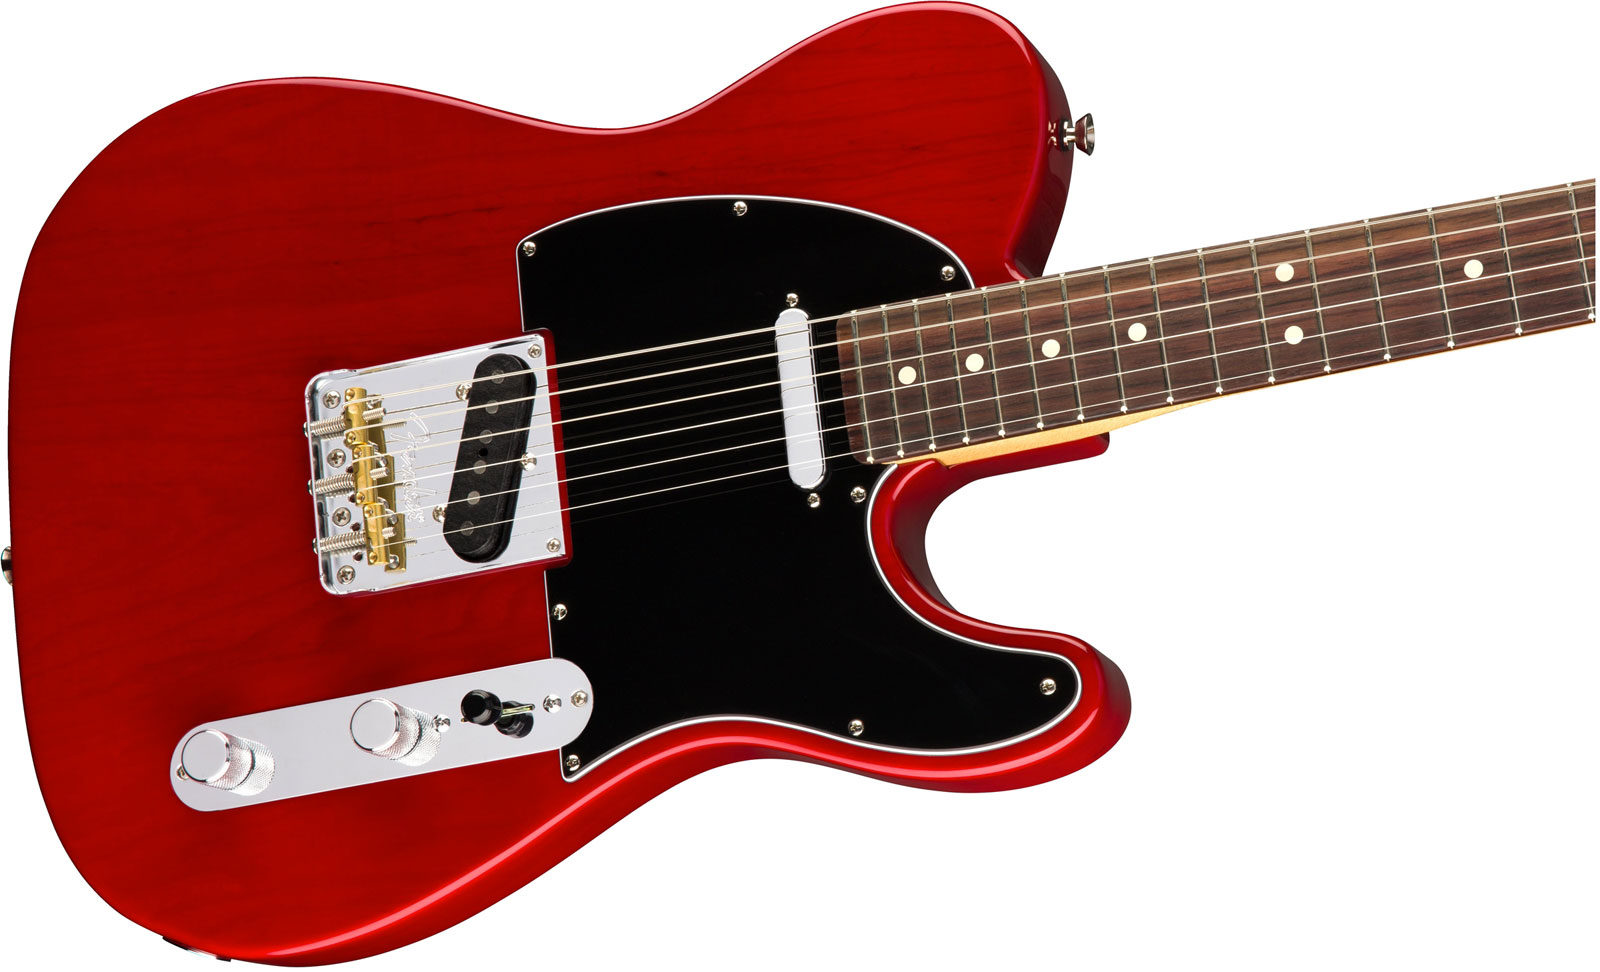 Fender Tele American Professional 2s Usa Rw - Crimson Red Transparent - Str shape electric guitar - Variation 2